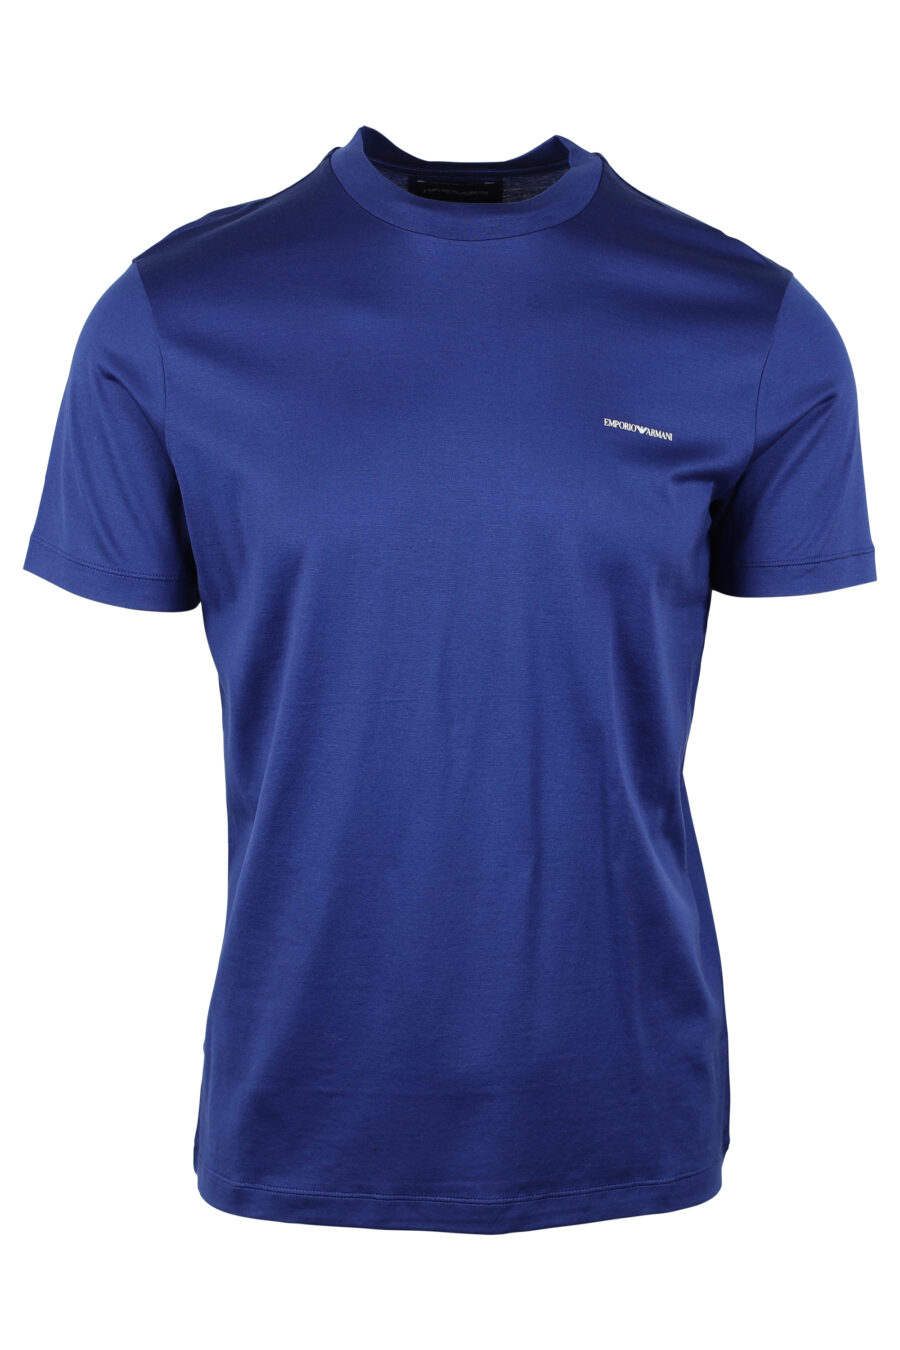 Camiseta azul con minilogo blanco - IMG 4665